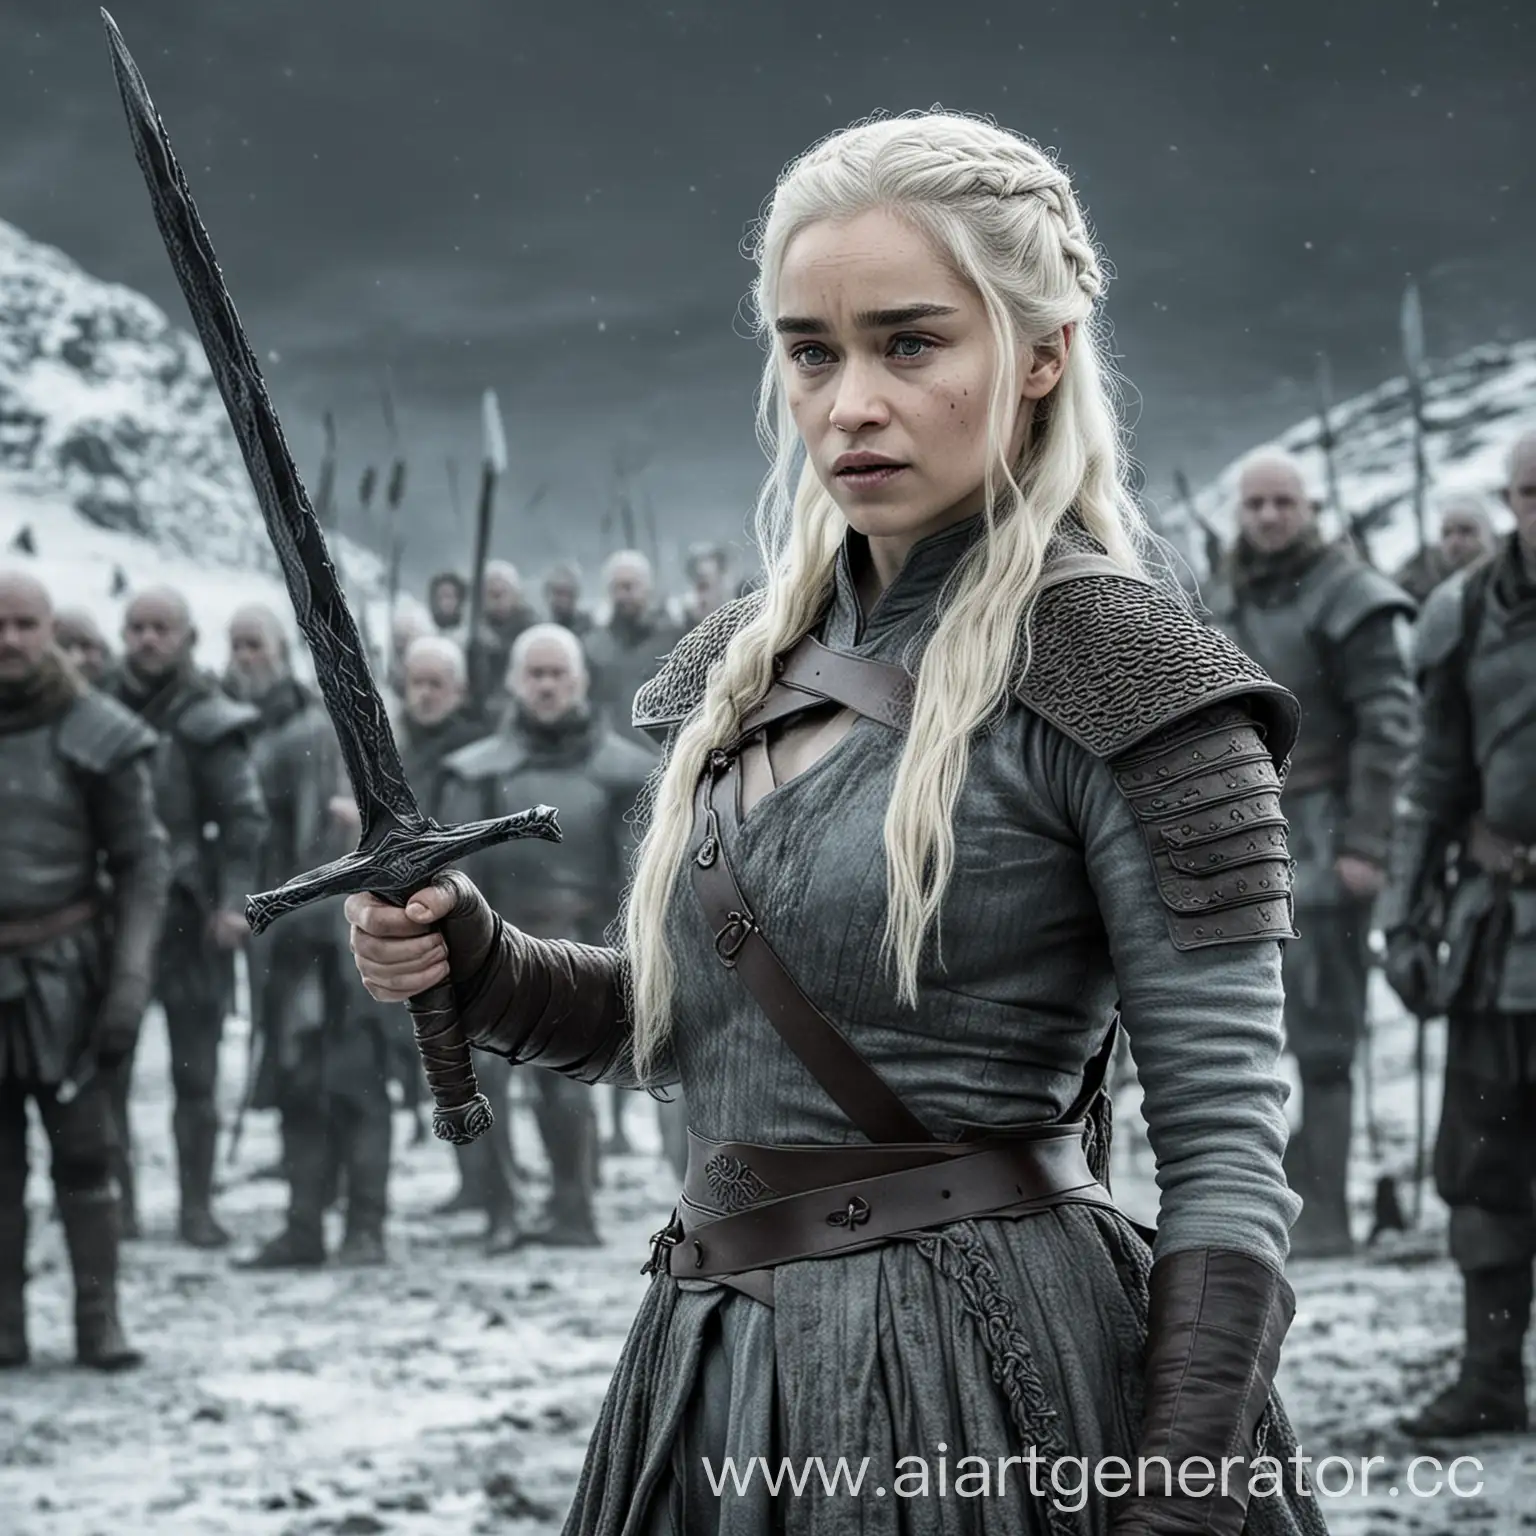 Daenerys-Targaryen-Emilia-Clarke-Defends-Against-White-Walkers-with-Sword